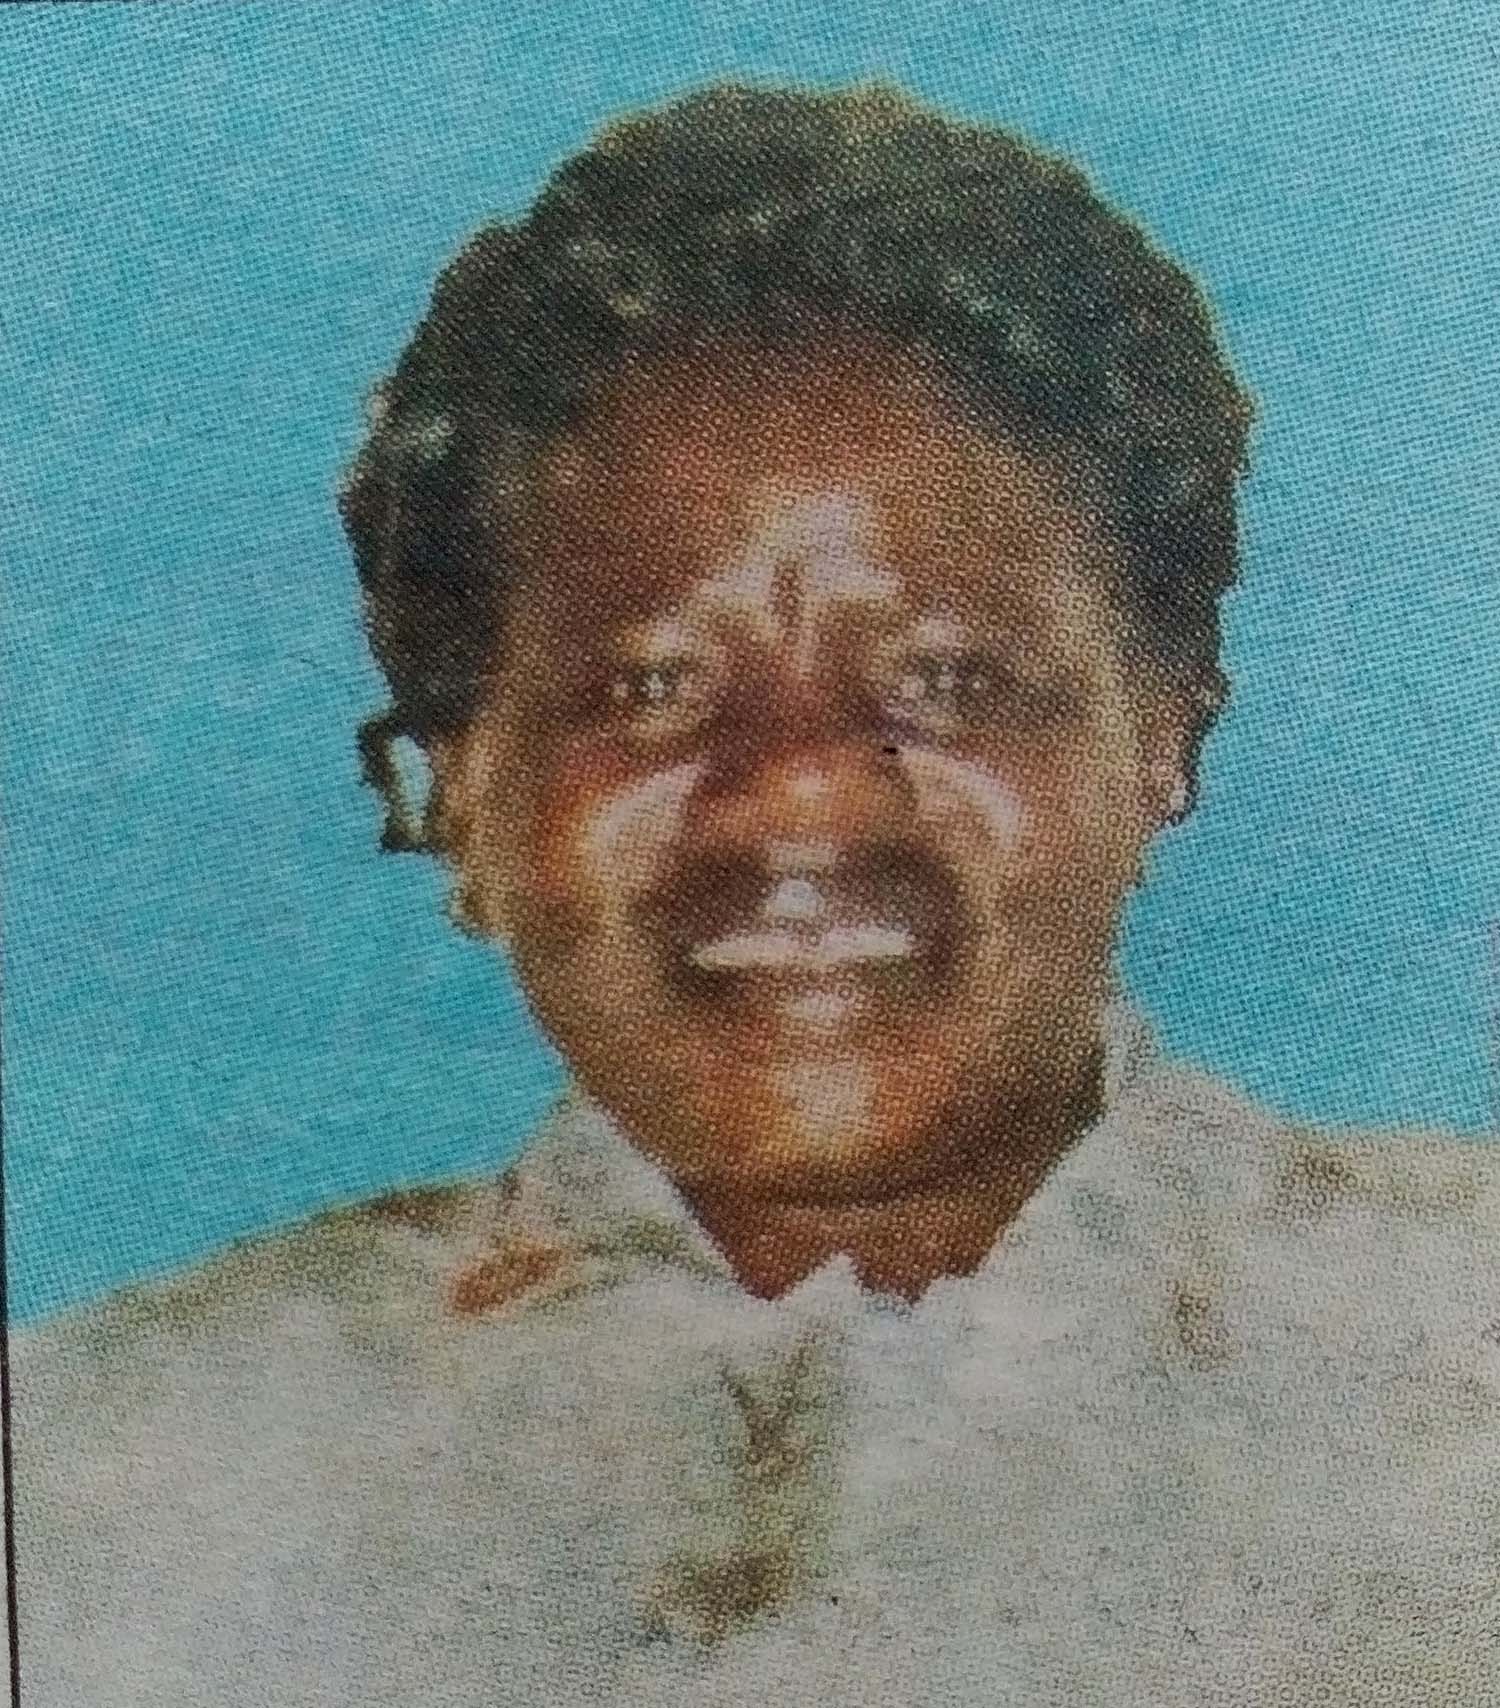 Obituary Image of Bacifica Kemunto Matundura Ontiri